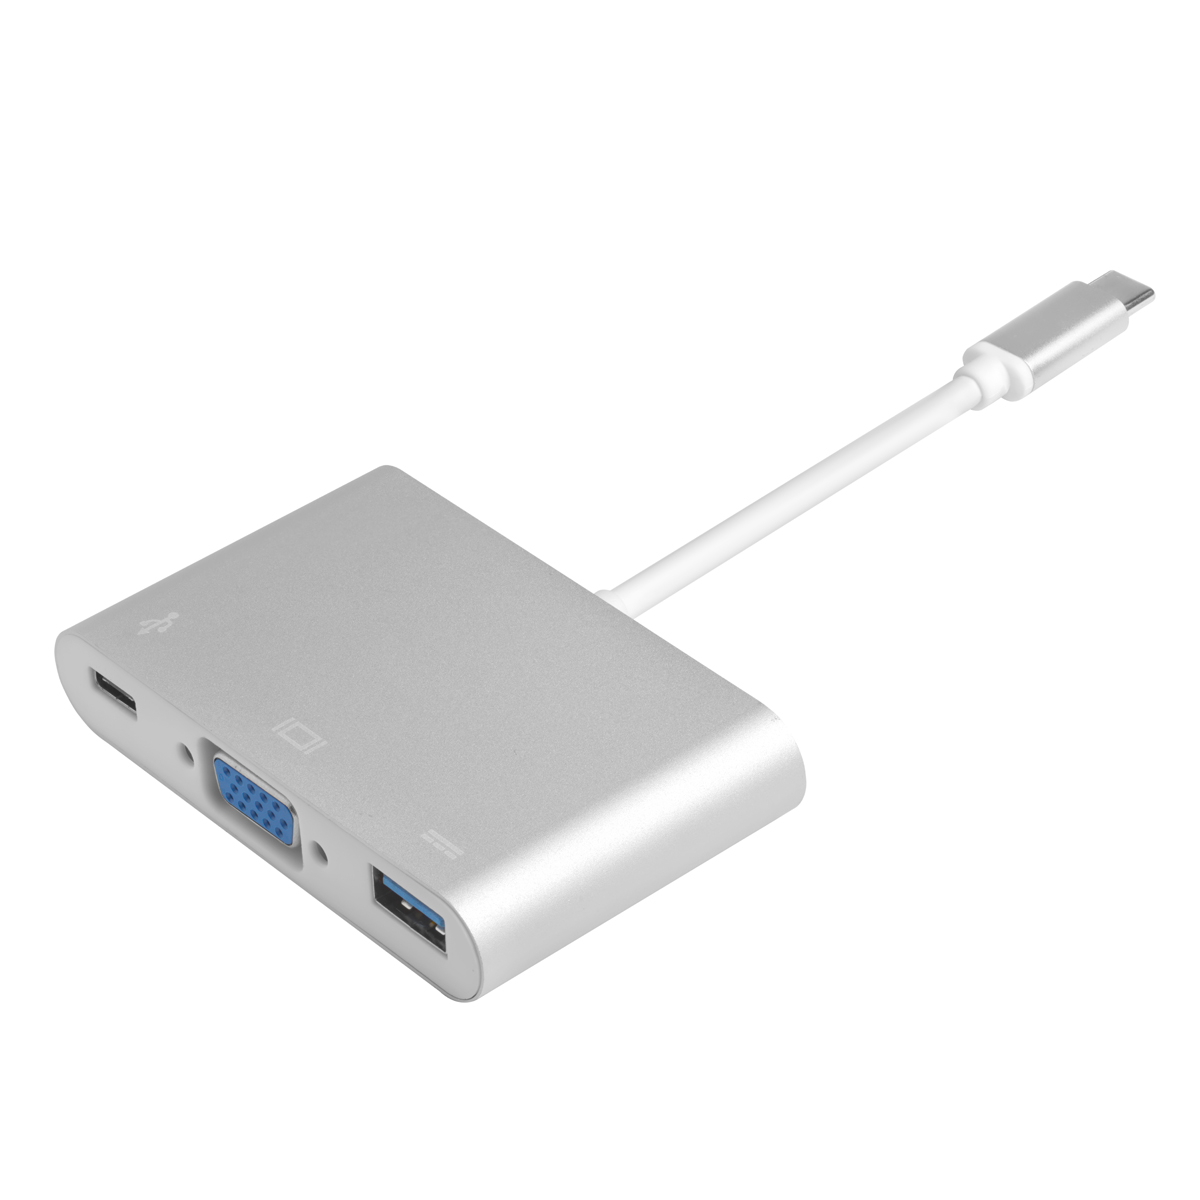 GCR GCR-AP25, Silver переходник USB Type-C - VGA + USB 3.0 + Type C